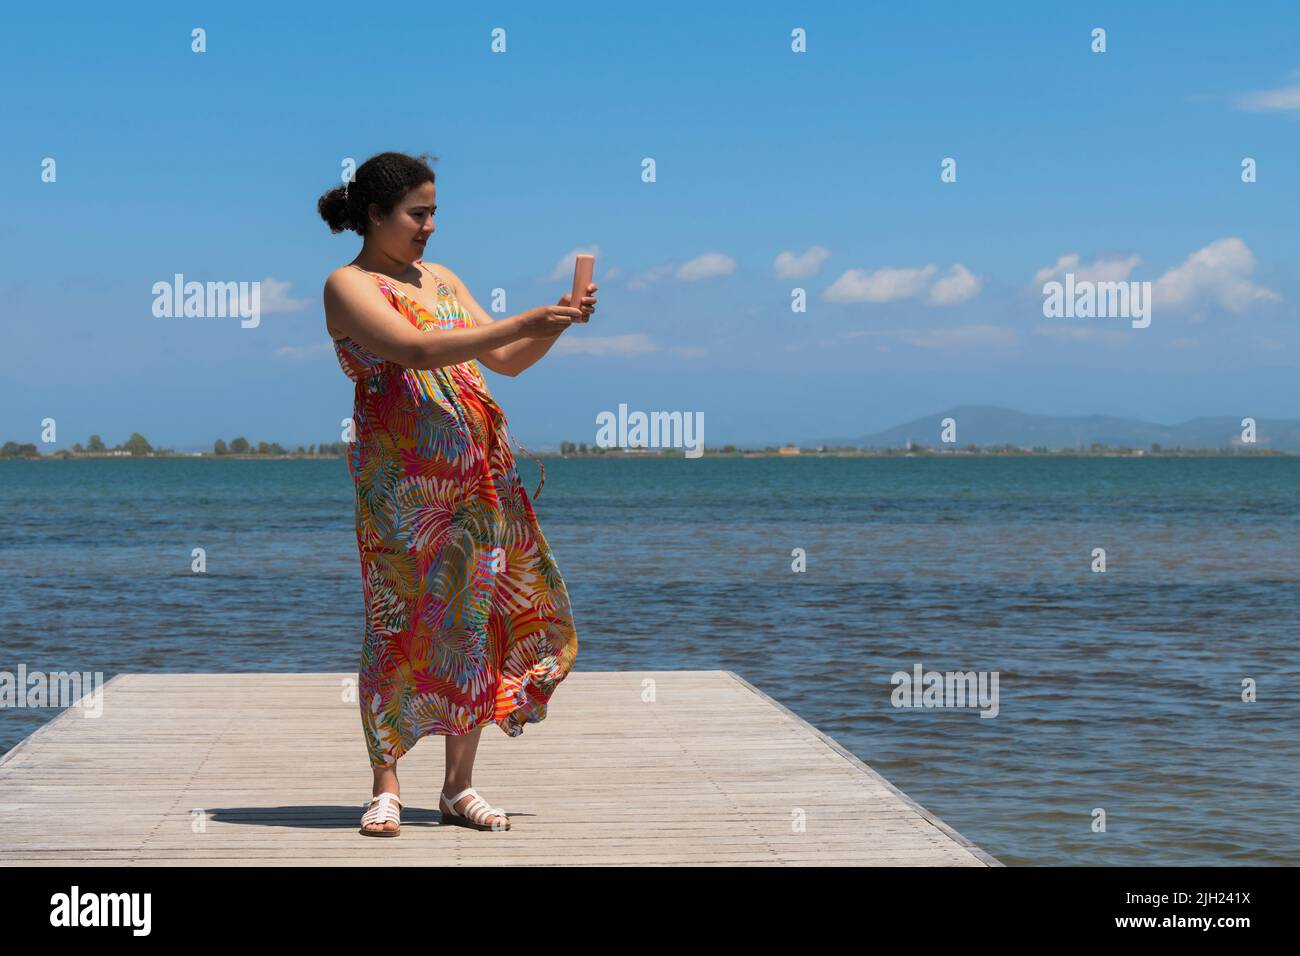 A woman on a pontoon bridge: Selective focus.  Stock Photo